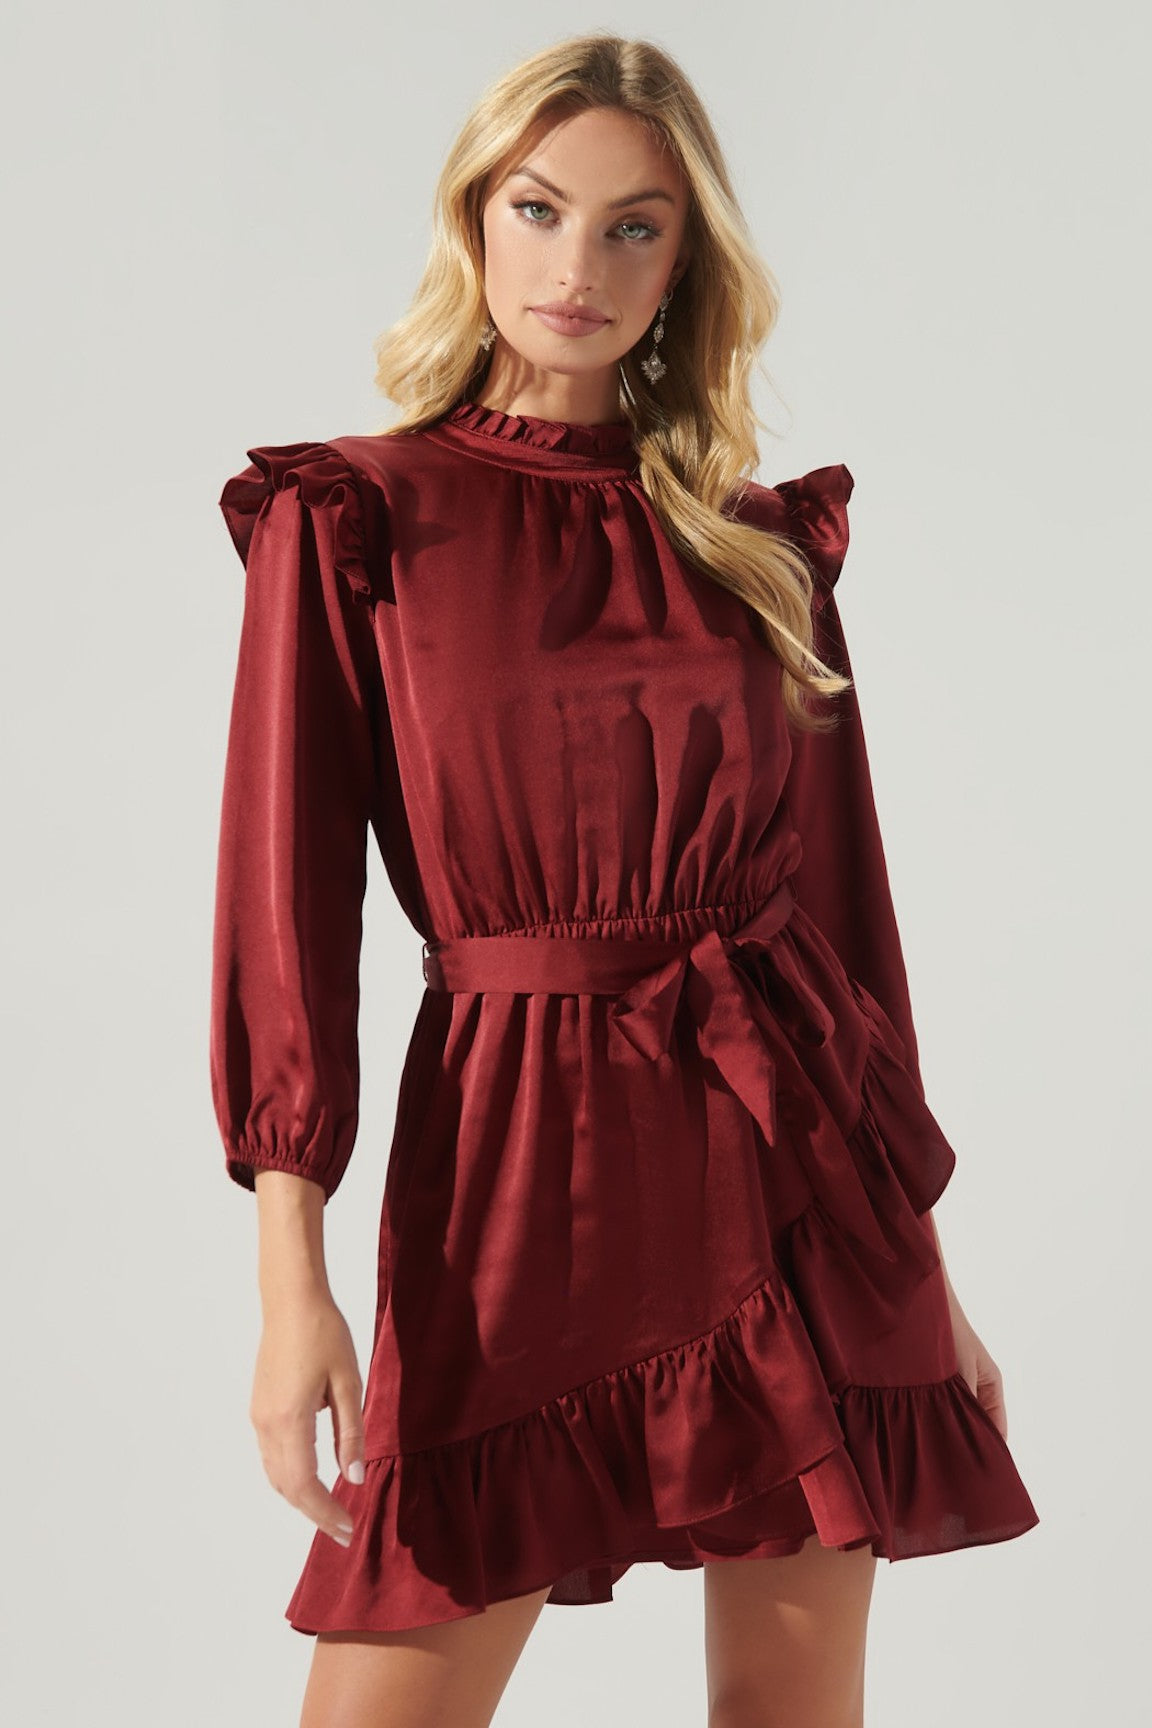 Mary Red Satin Dress